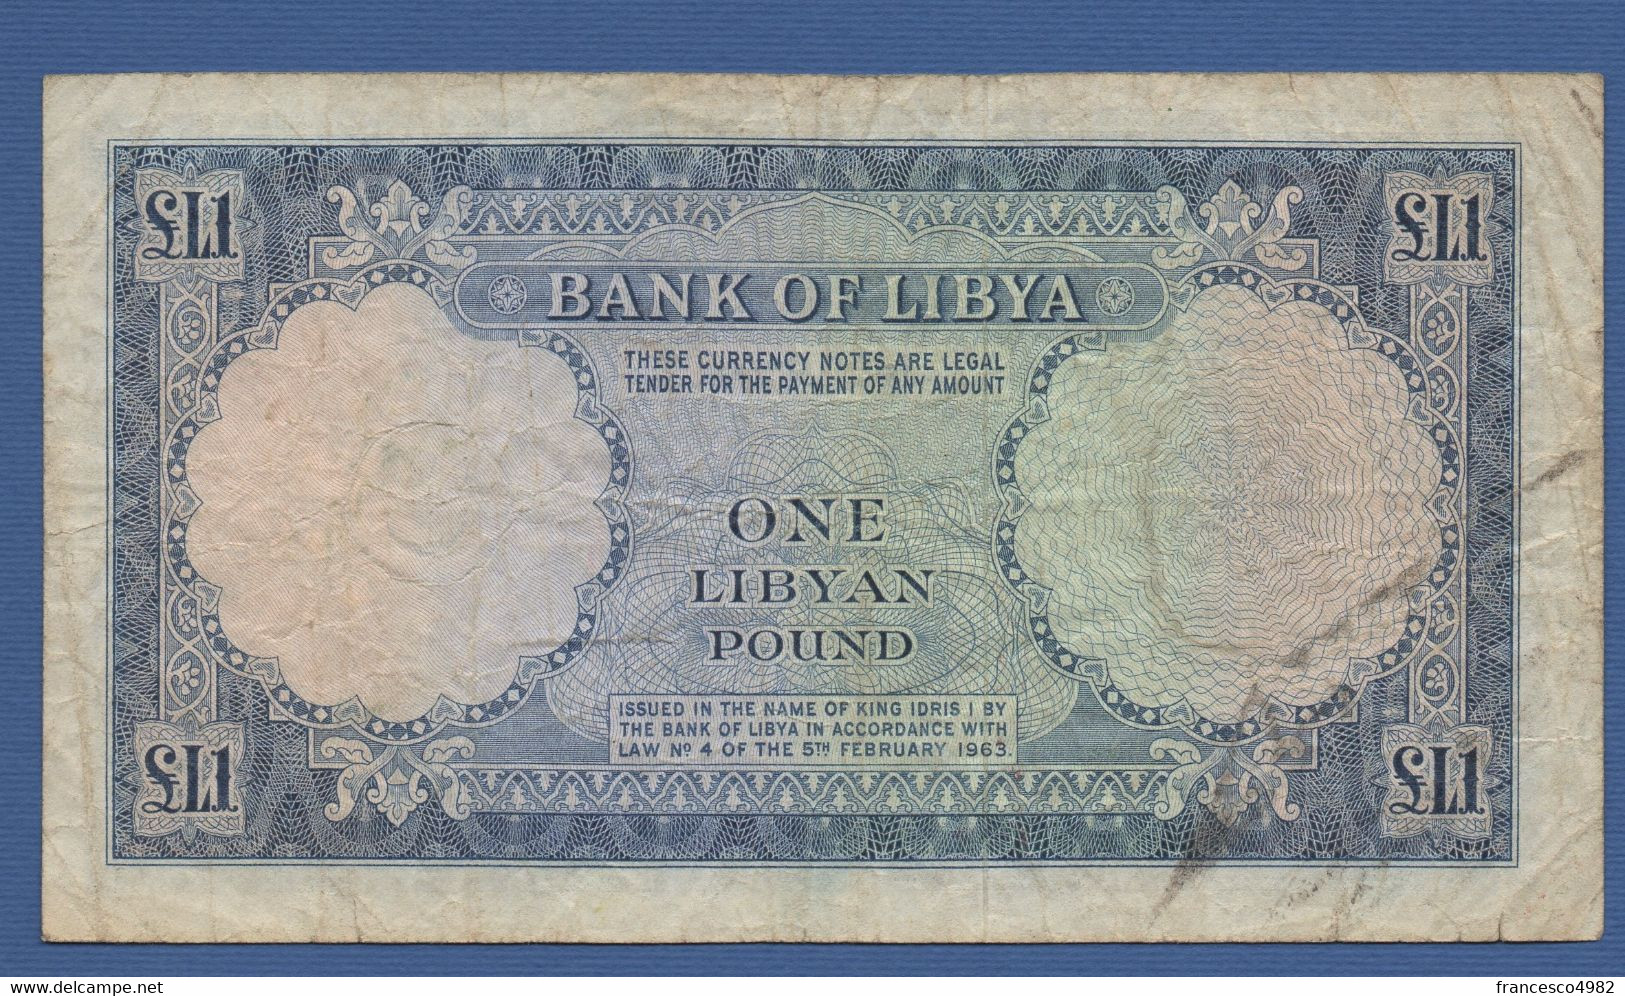 LIBYA - P.25a – 1 Pound 1963 - Circulated, Serie 4 C/22 560284 - Libya